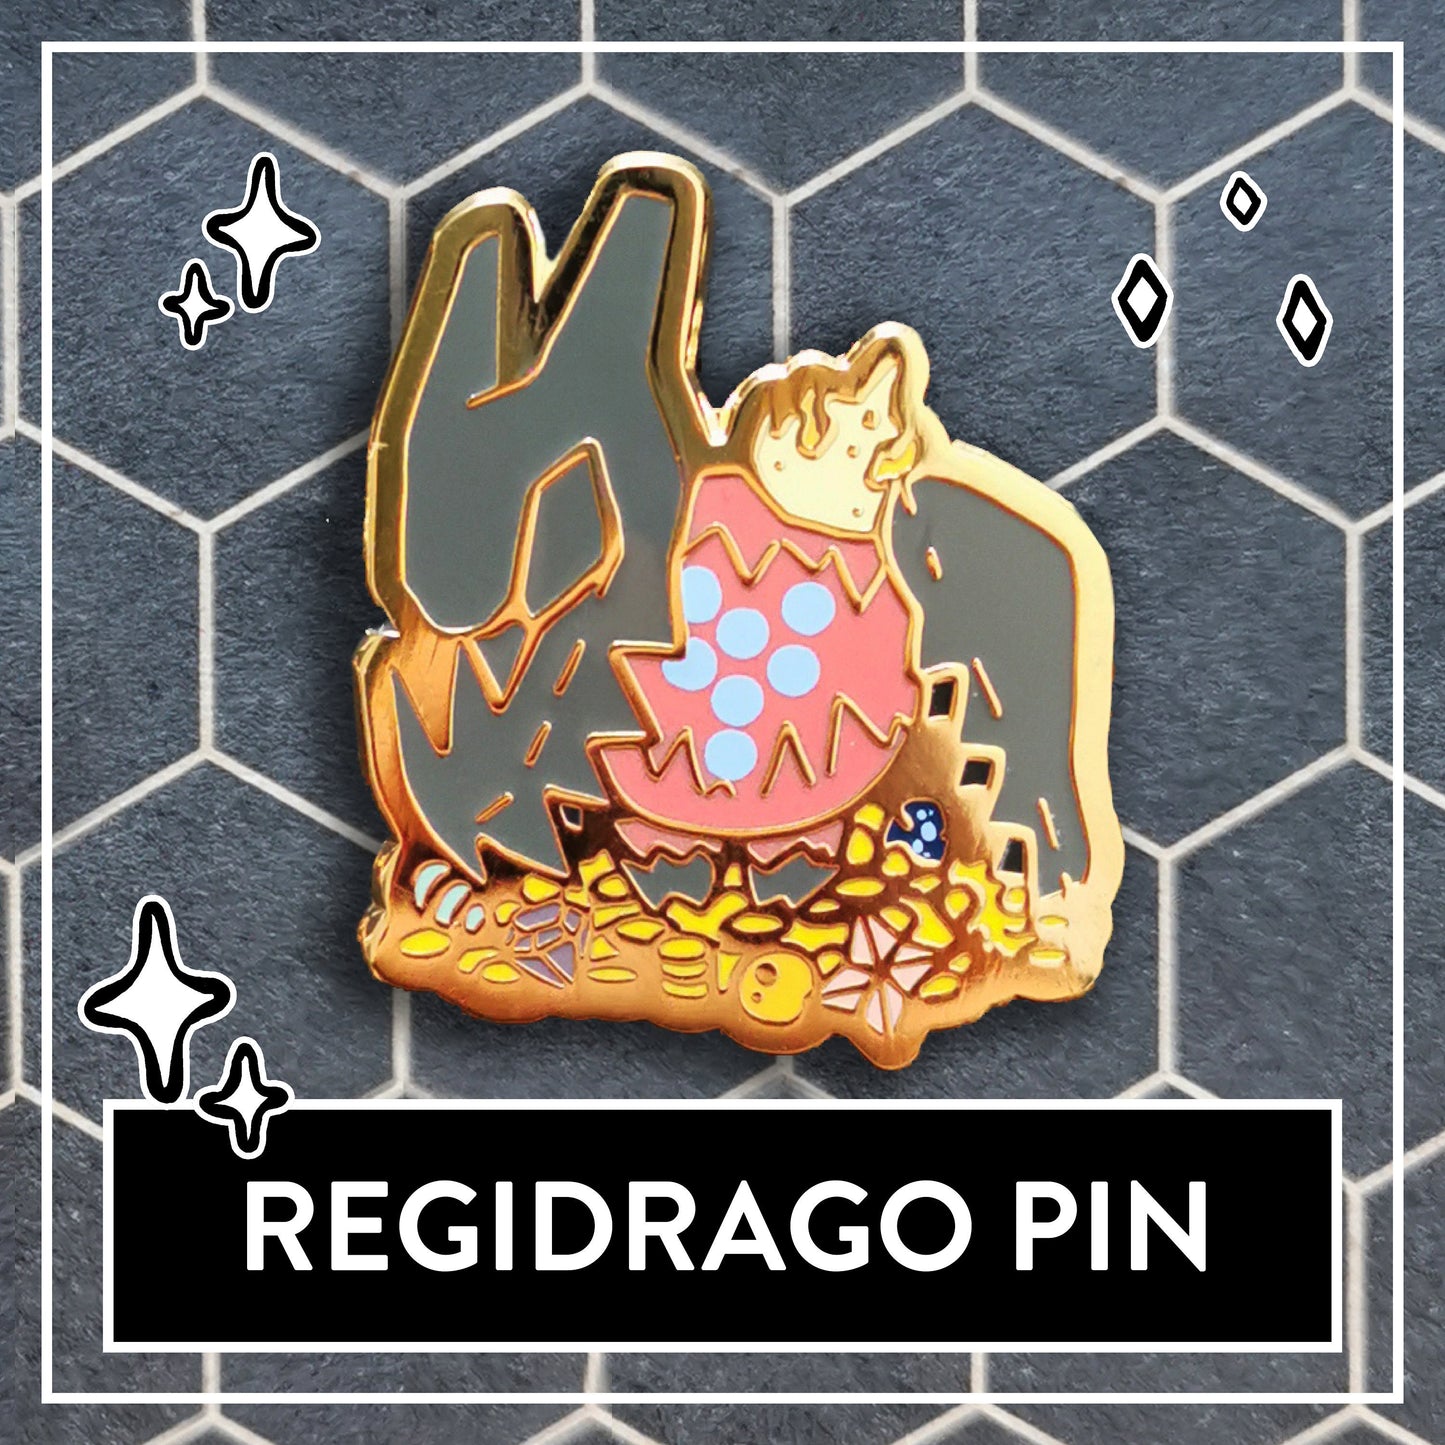 Pokemon Legendary Regi Pins – Small & cute Hard Enamel Pins Regieleki, Regidrago, Regigigas Chibi Style